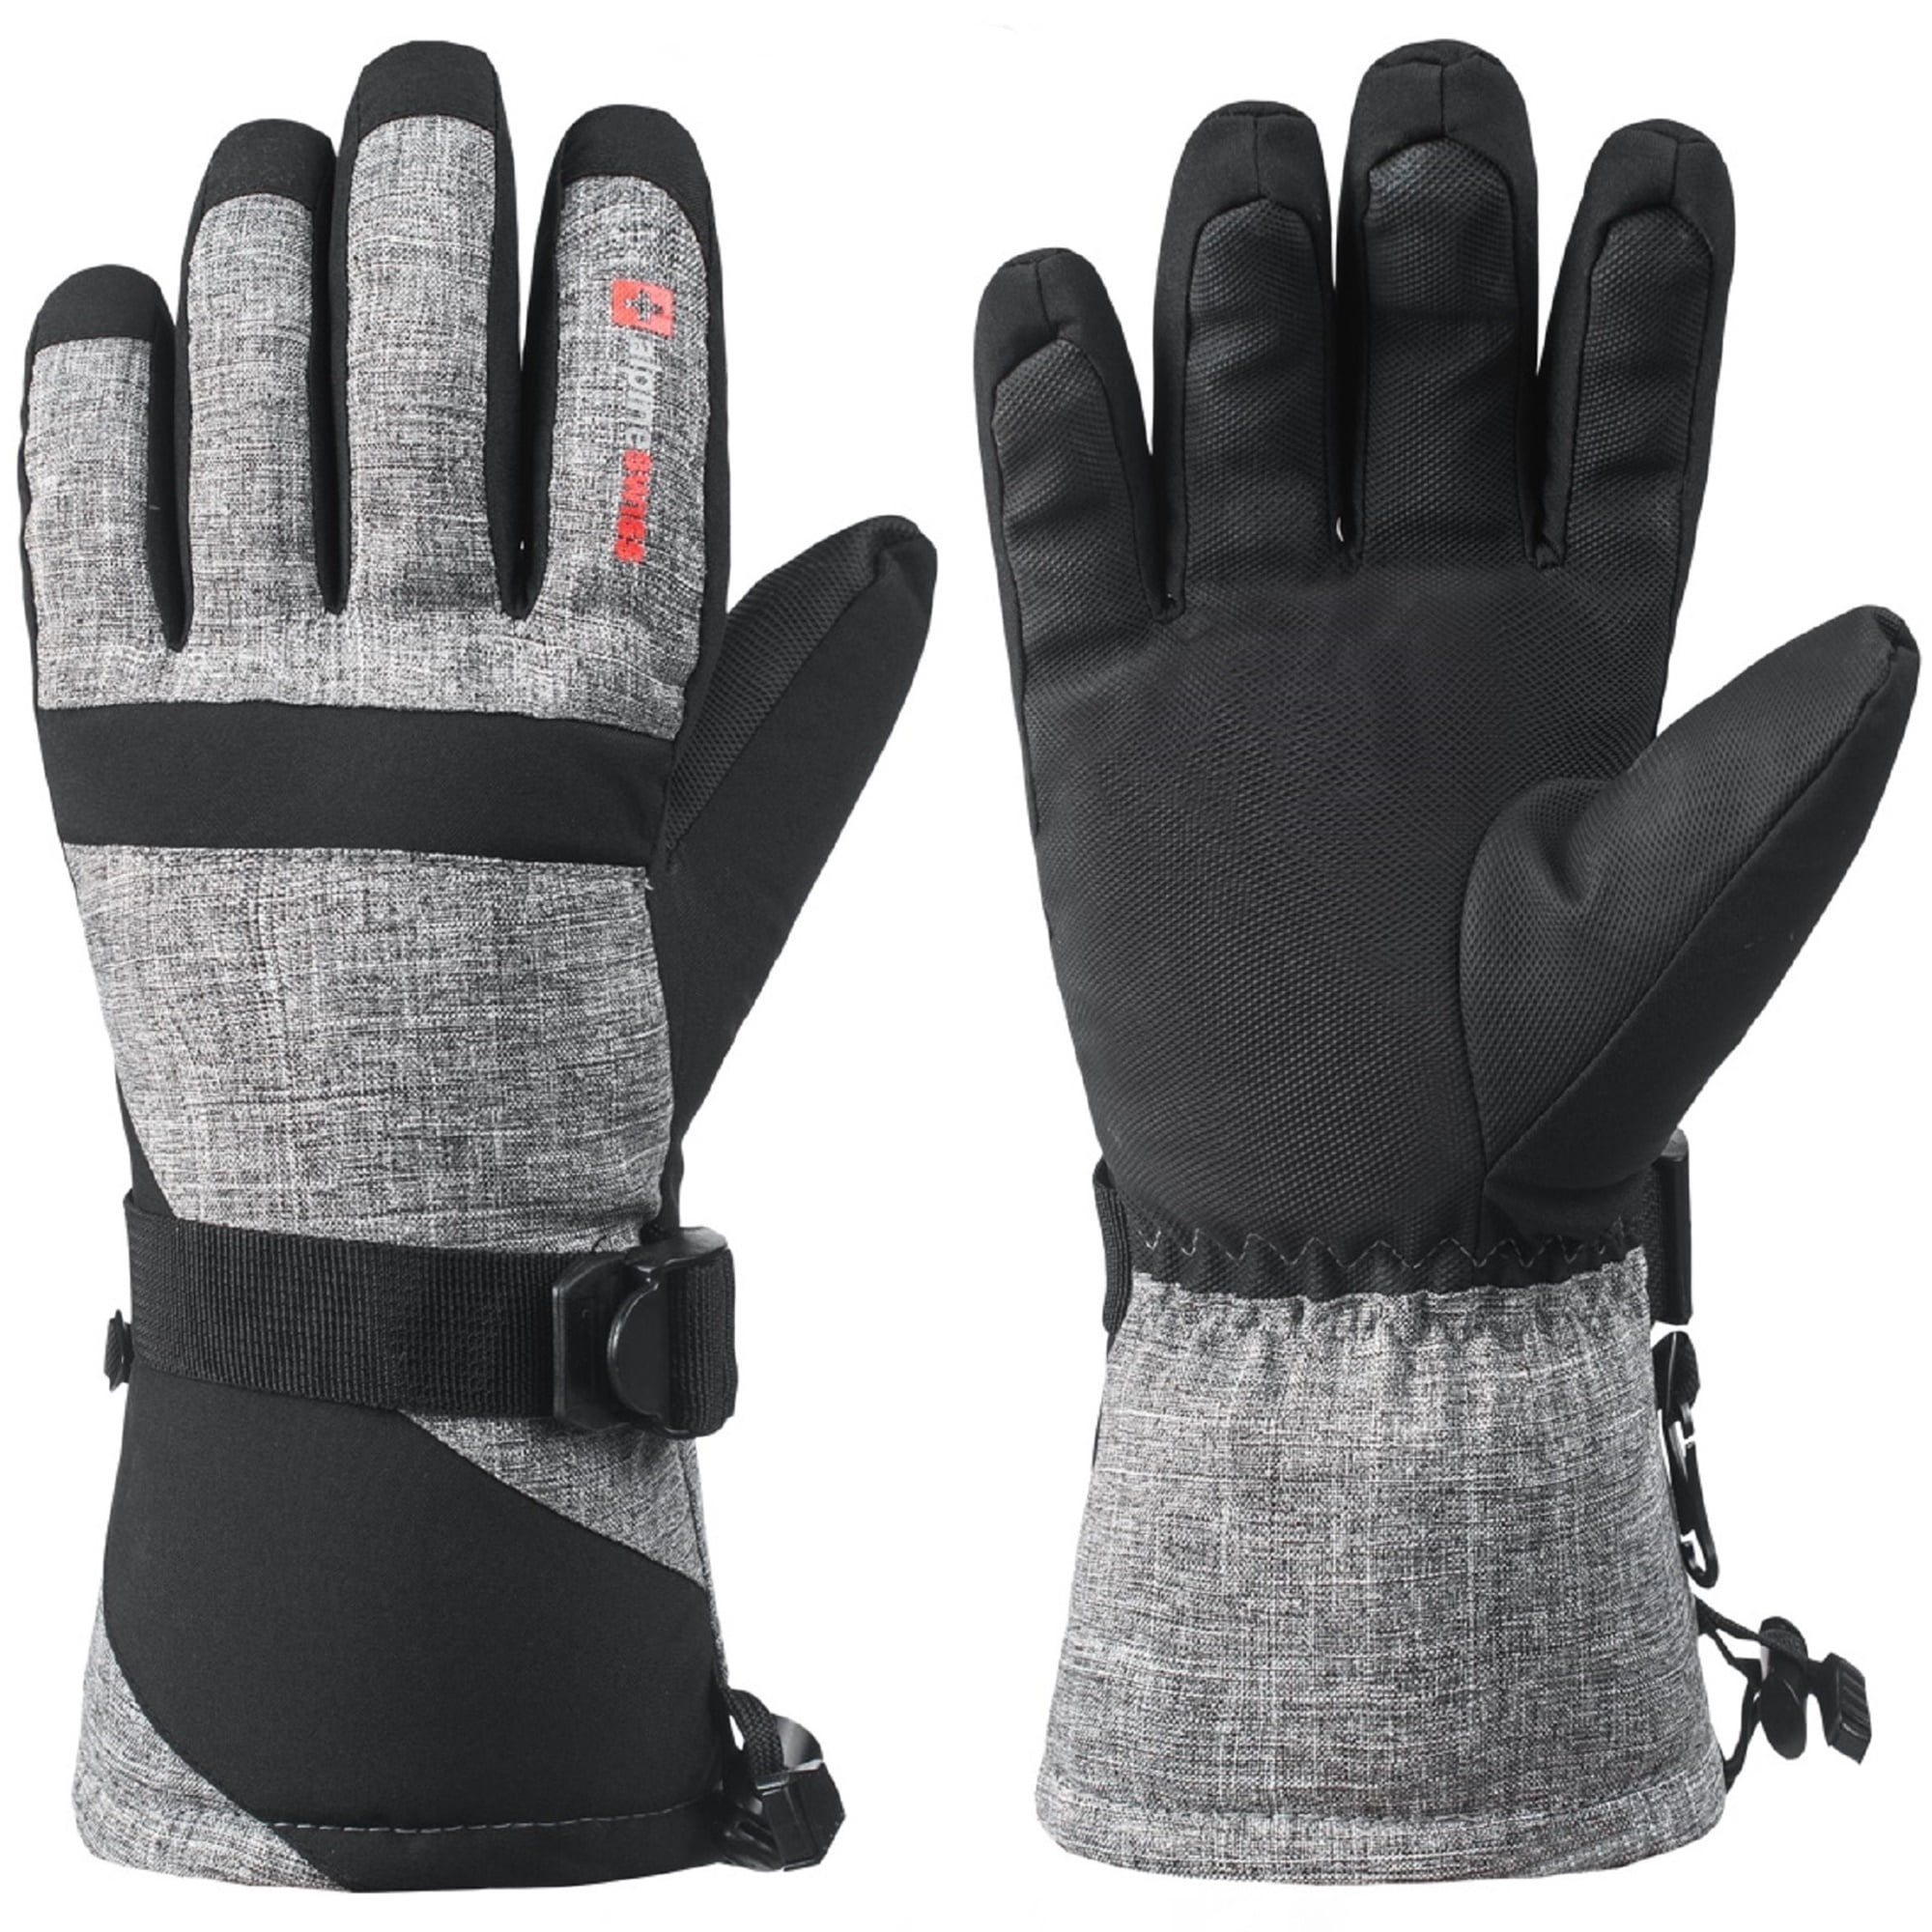 Trespass thermal 3M Thinsulate long warm brown ski snow snowboarding gloves 